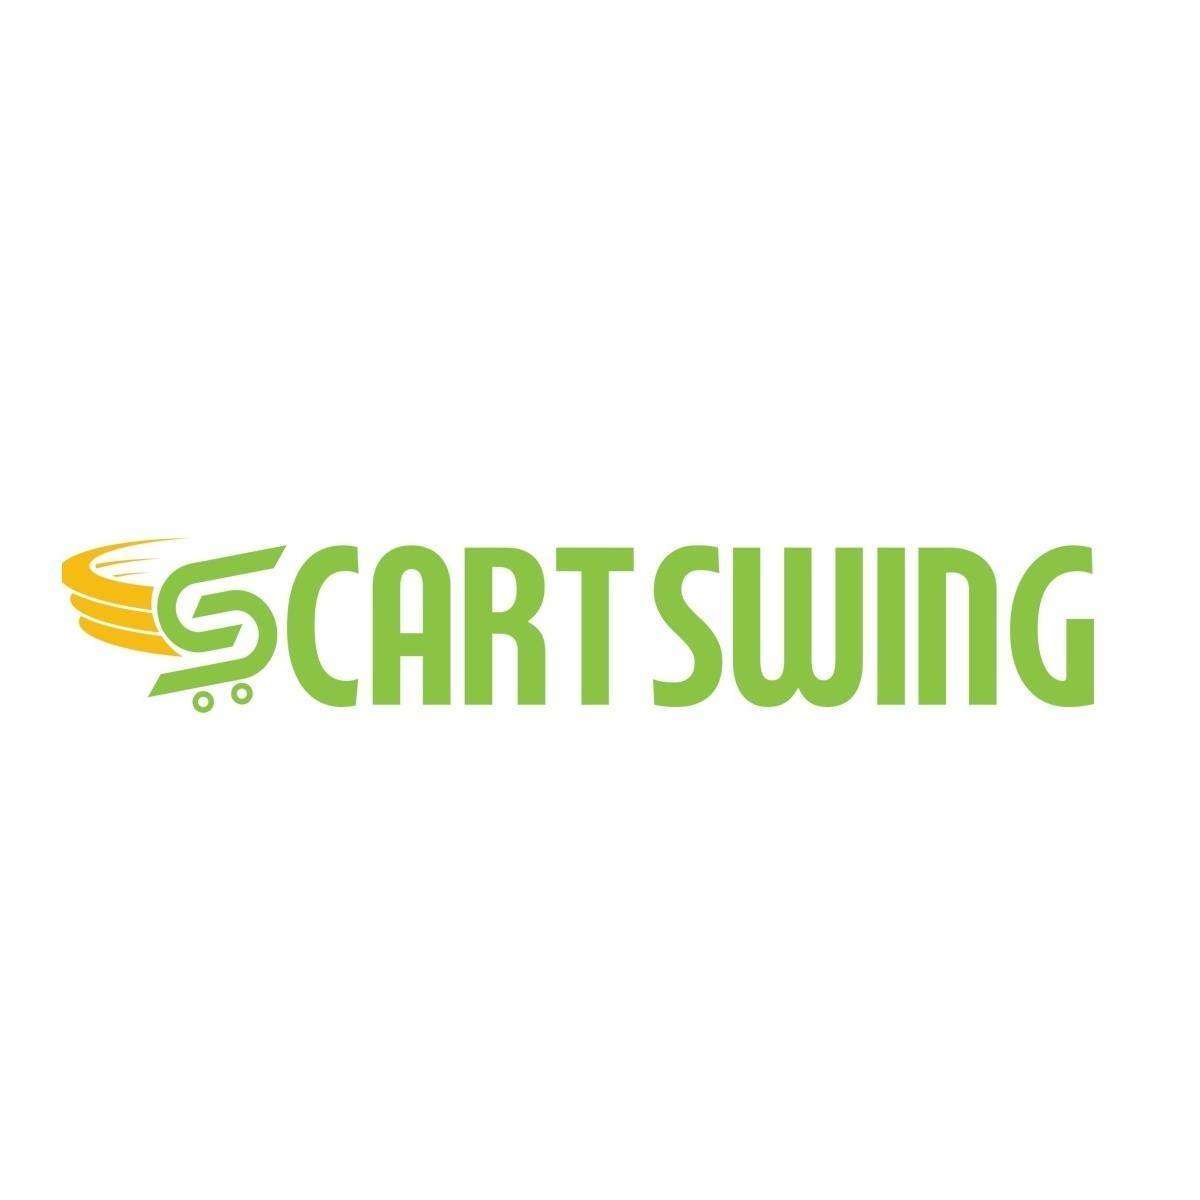 Cartswing (E-Store)